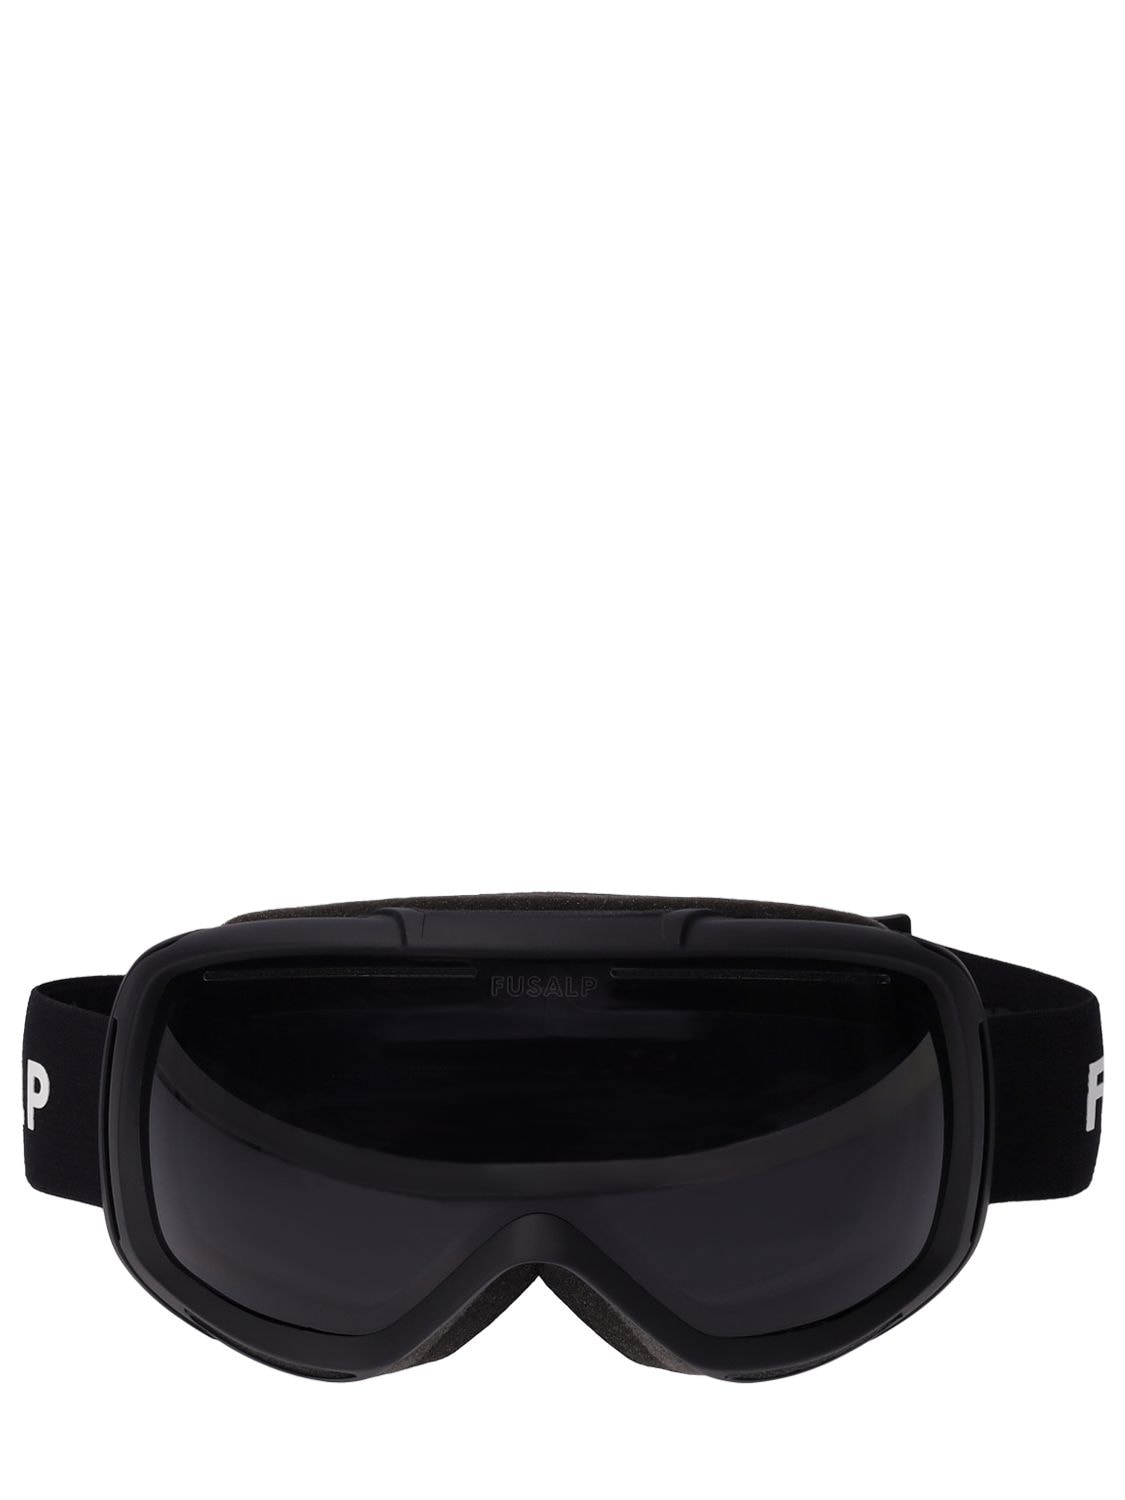 Fusalp Tech Eyes Goggles In Black